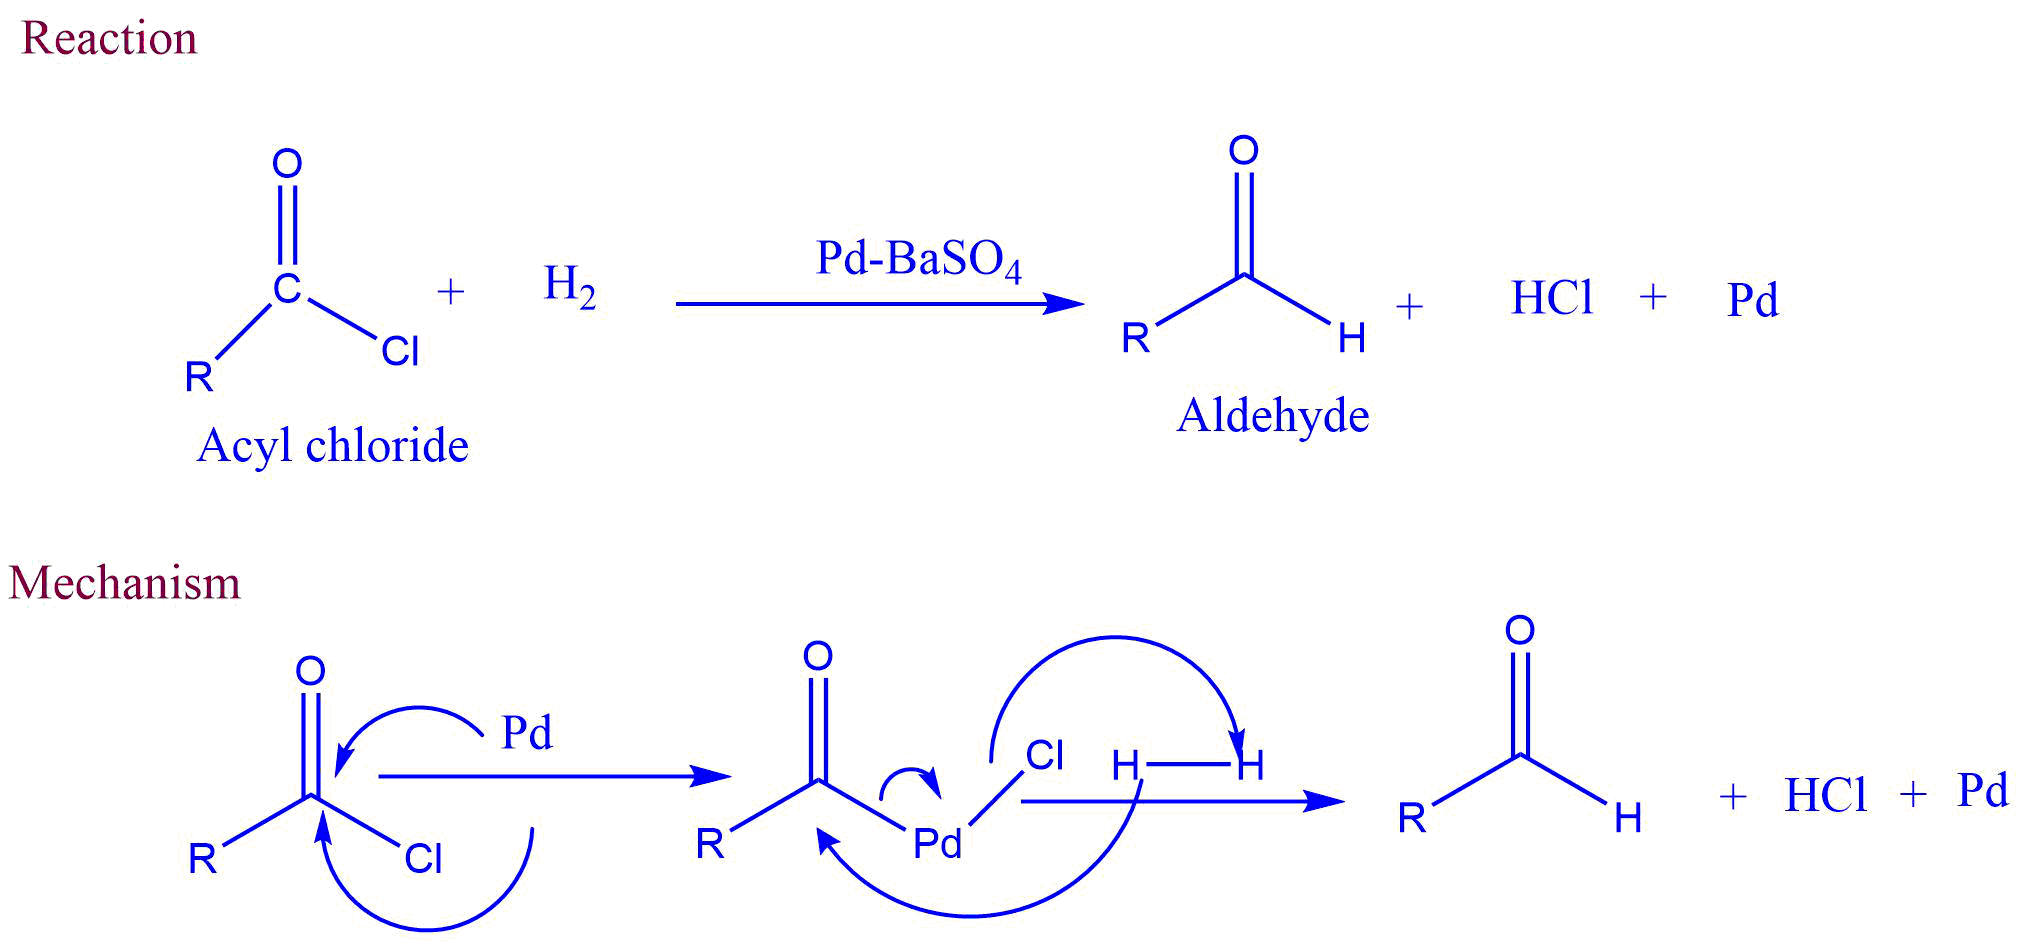 Mechanism of Rosenmund reduction